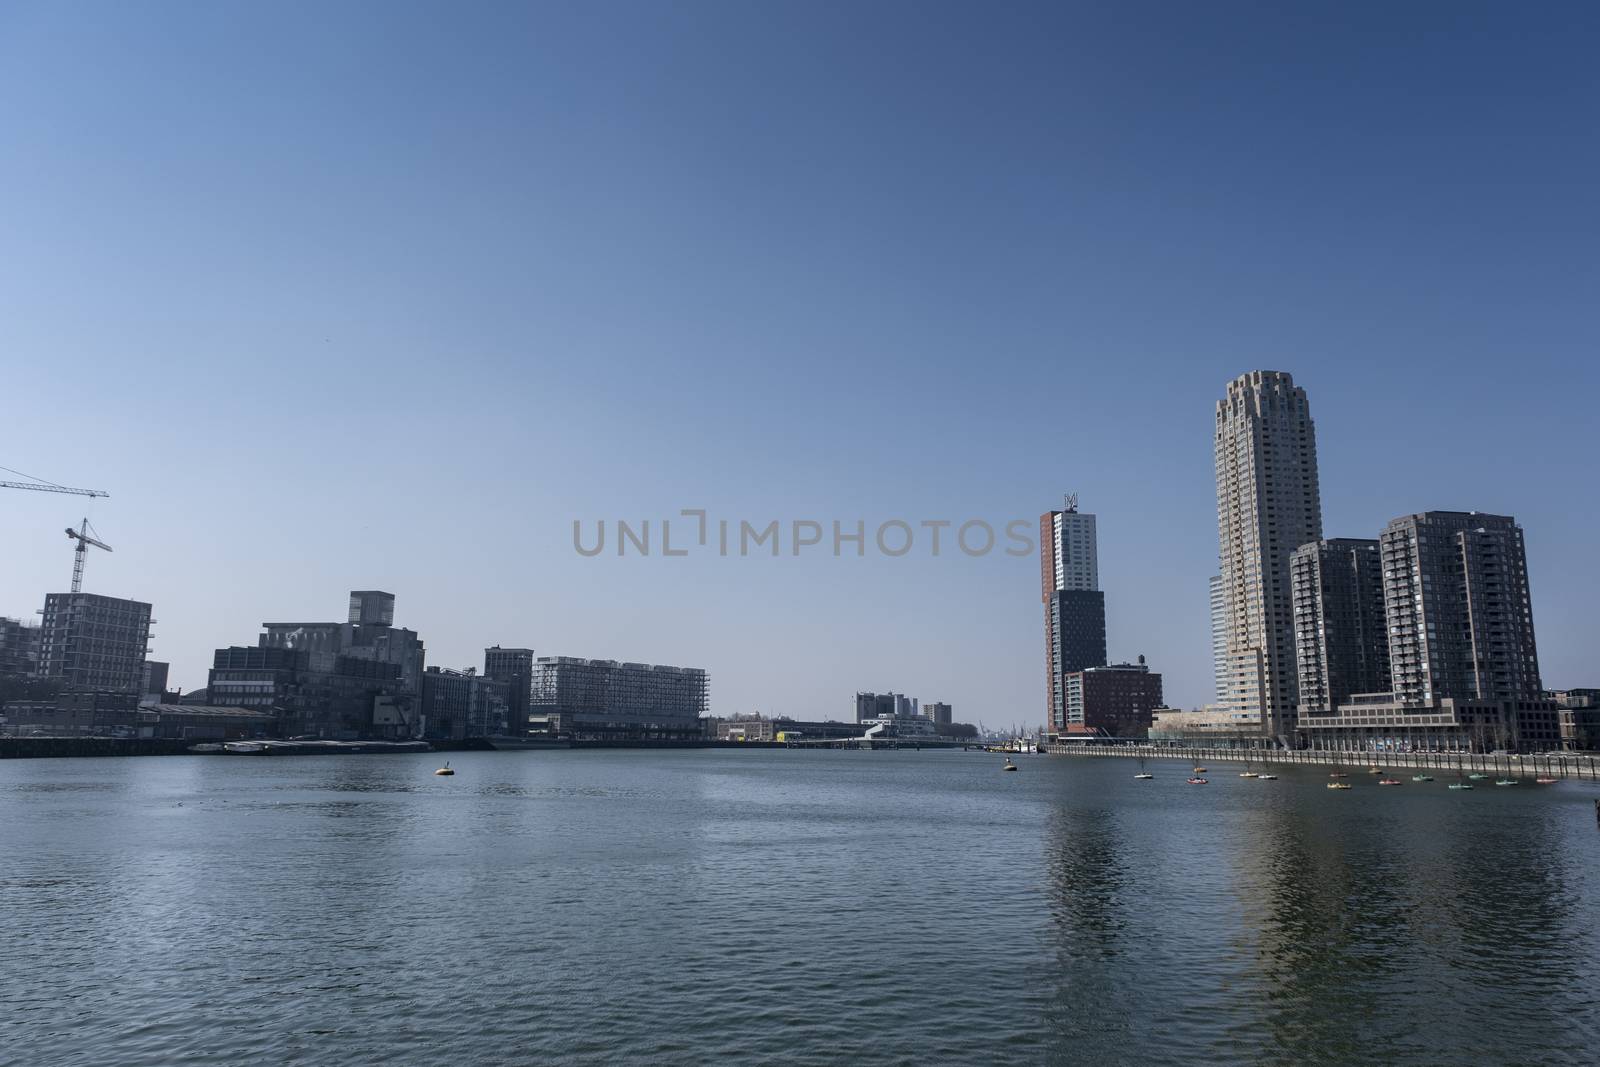 Cityscape of Rotterdam, viewing 'de kop van zuid' from the riverside